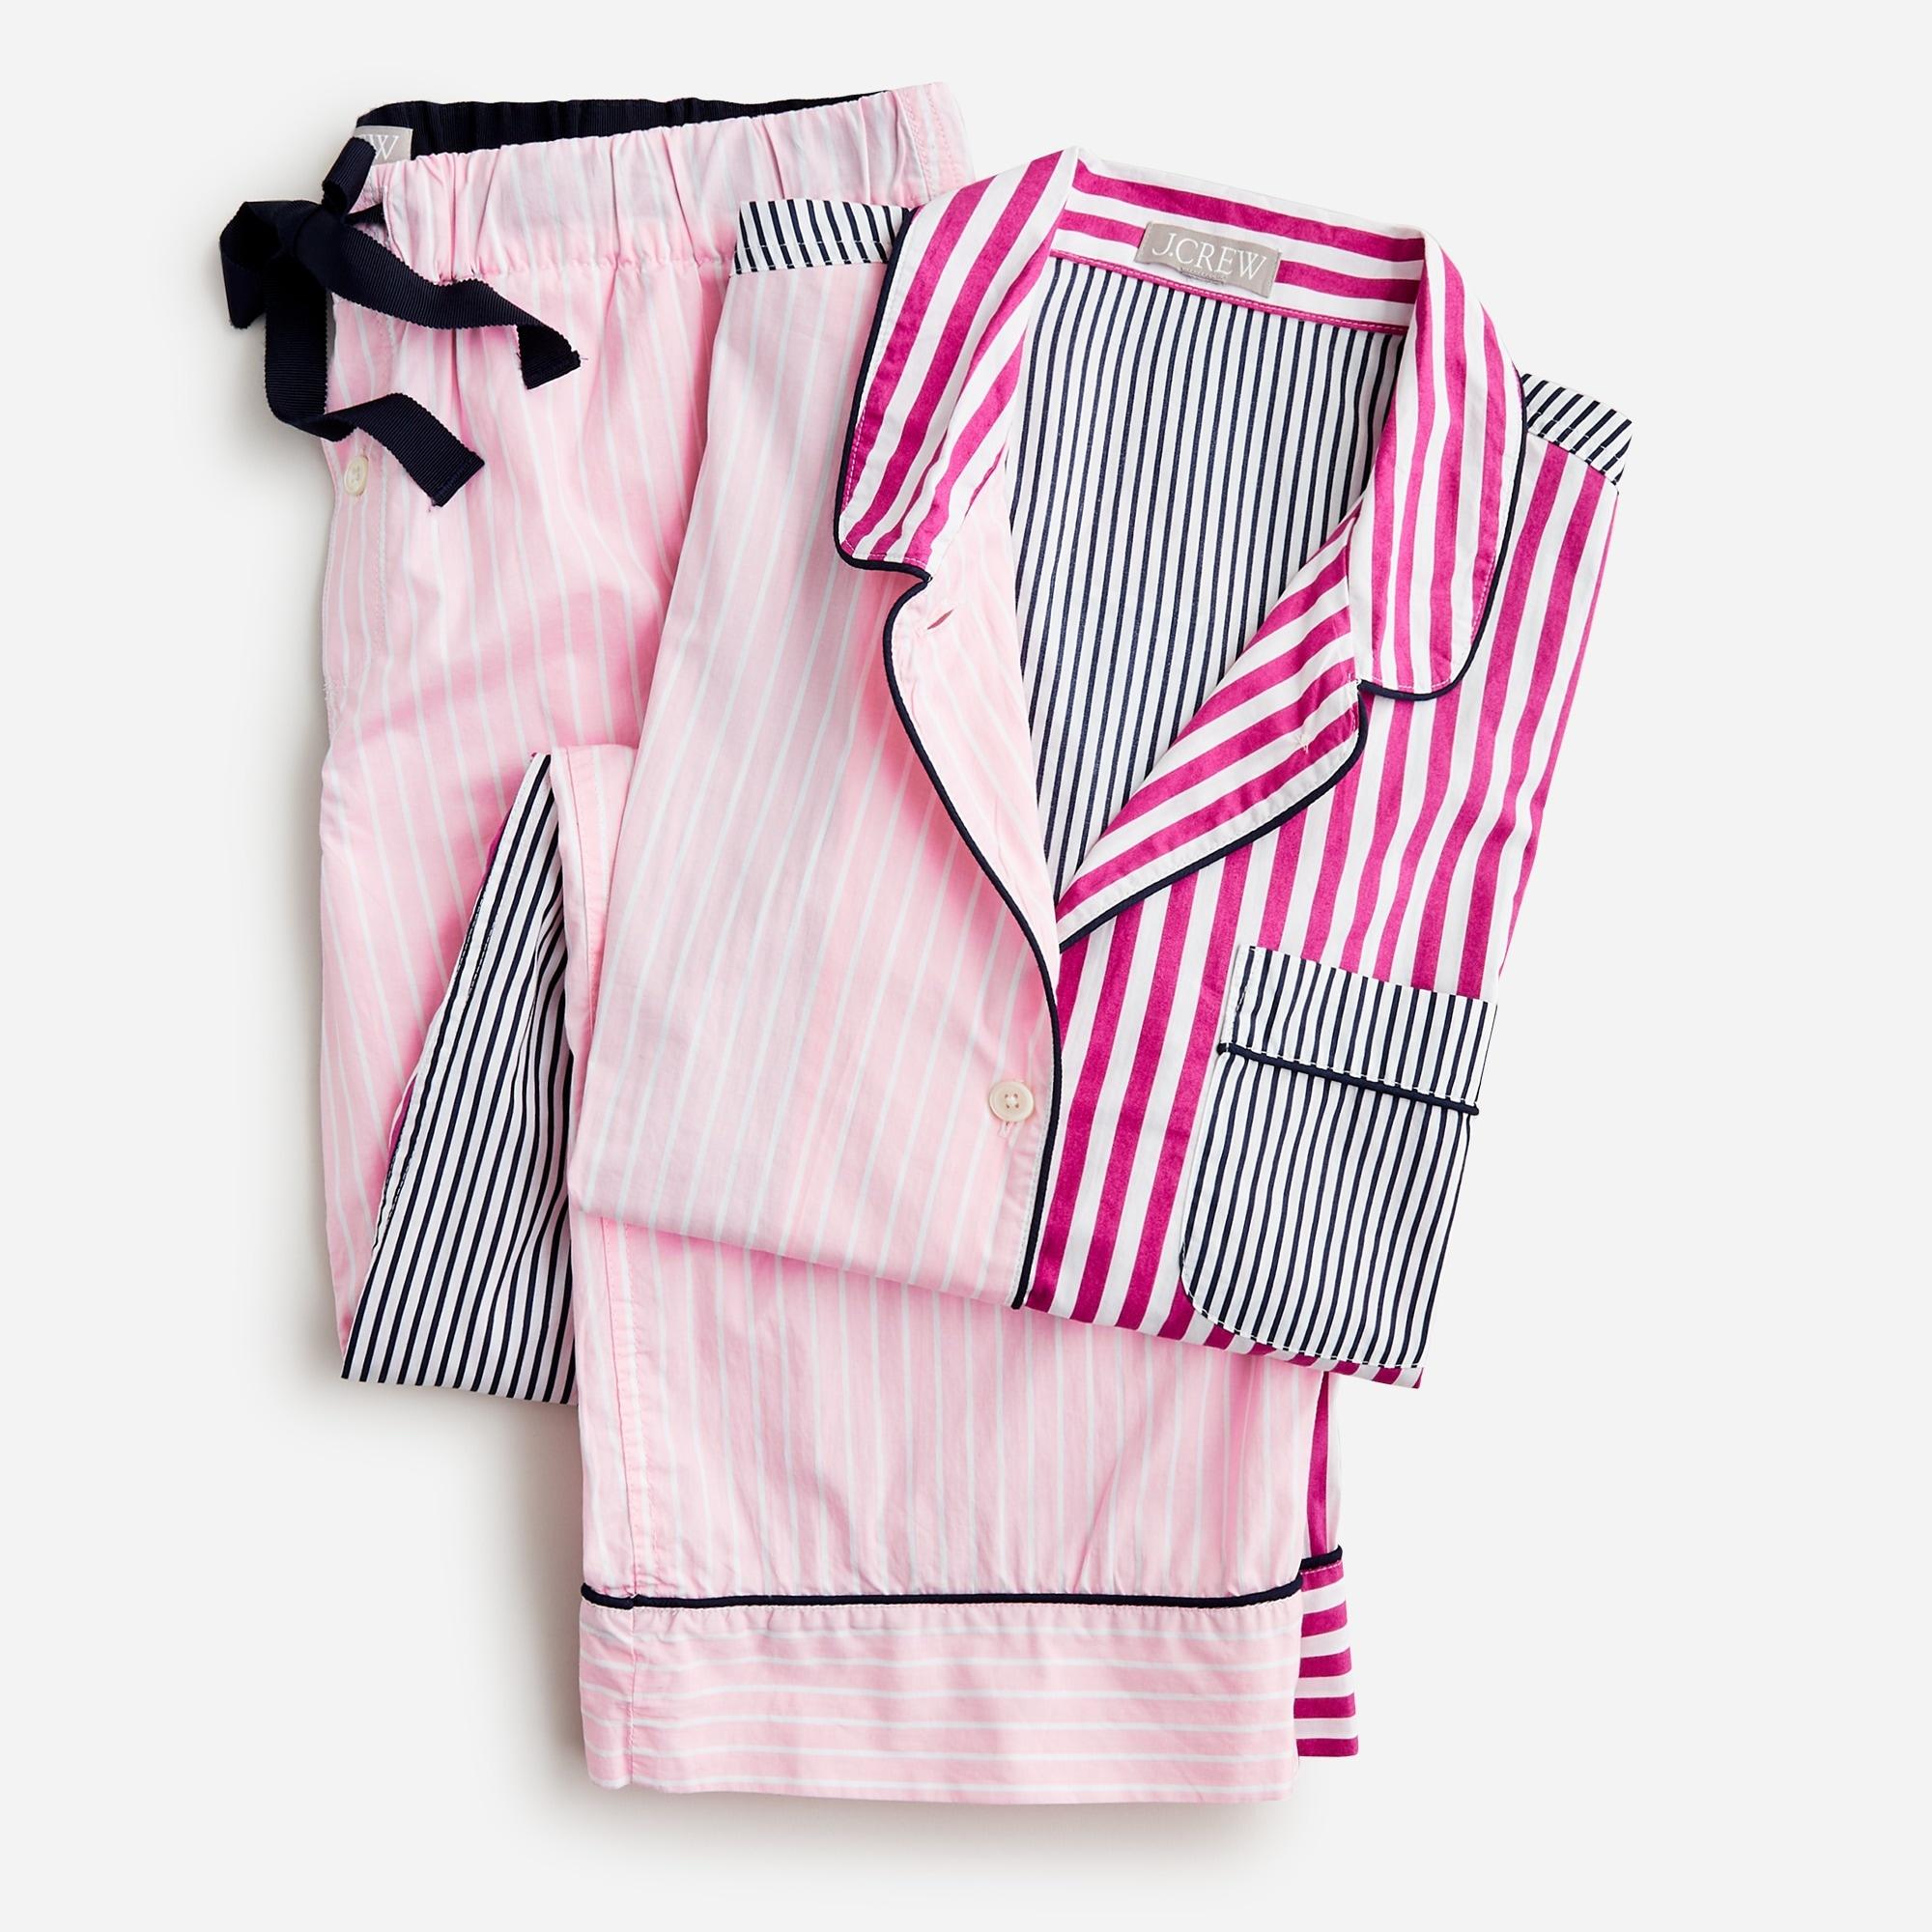 J.Crew Long-sleeve Cotton Poplin Pajama Set In Cocktail Stripe in Pink